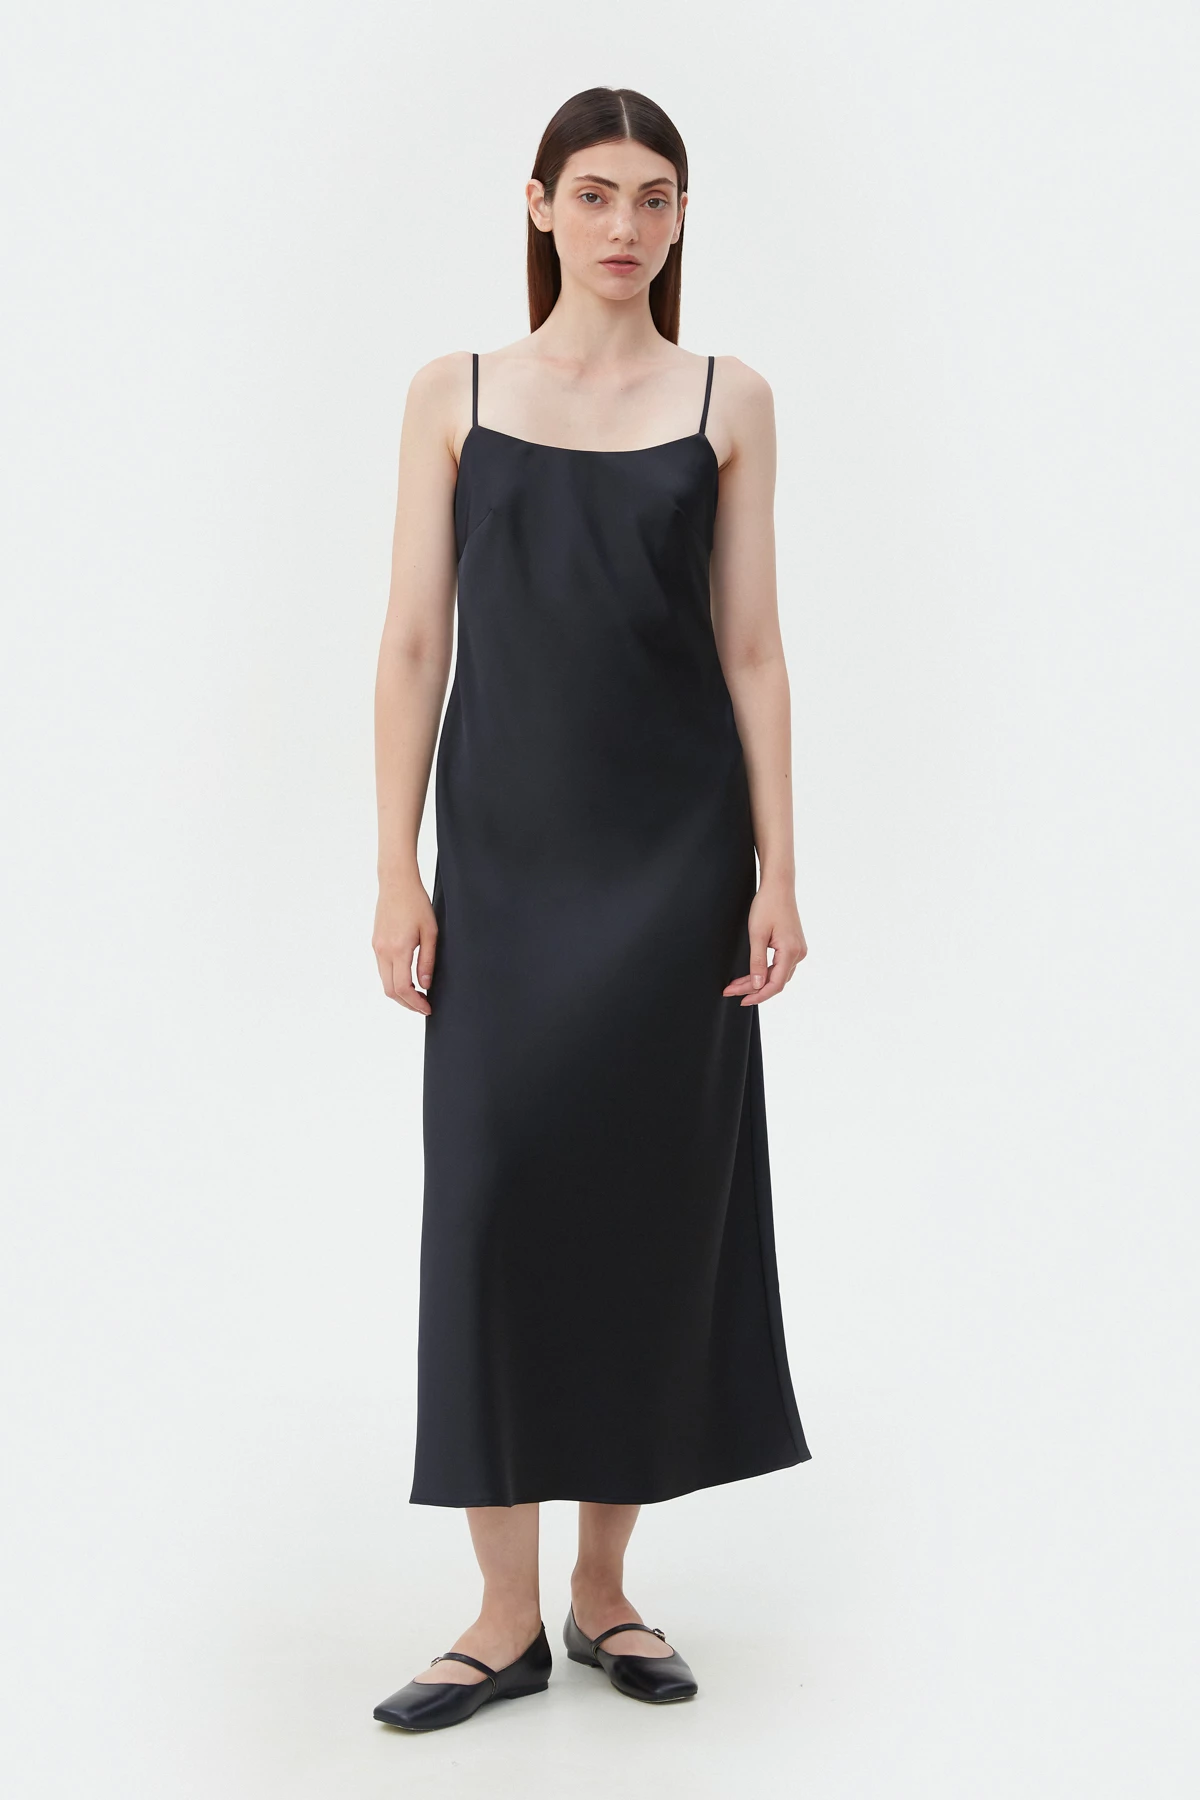 Black satin open-back dress, photo 1